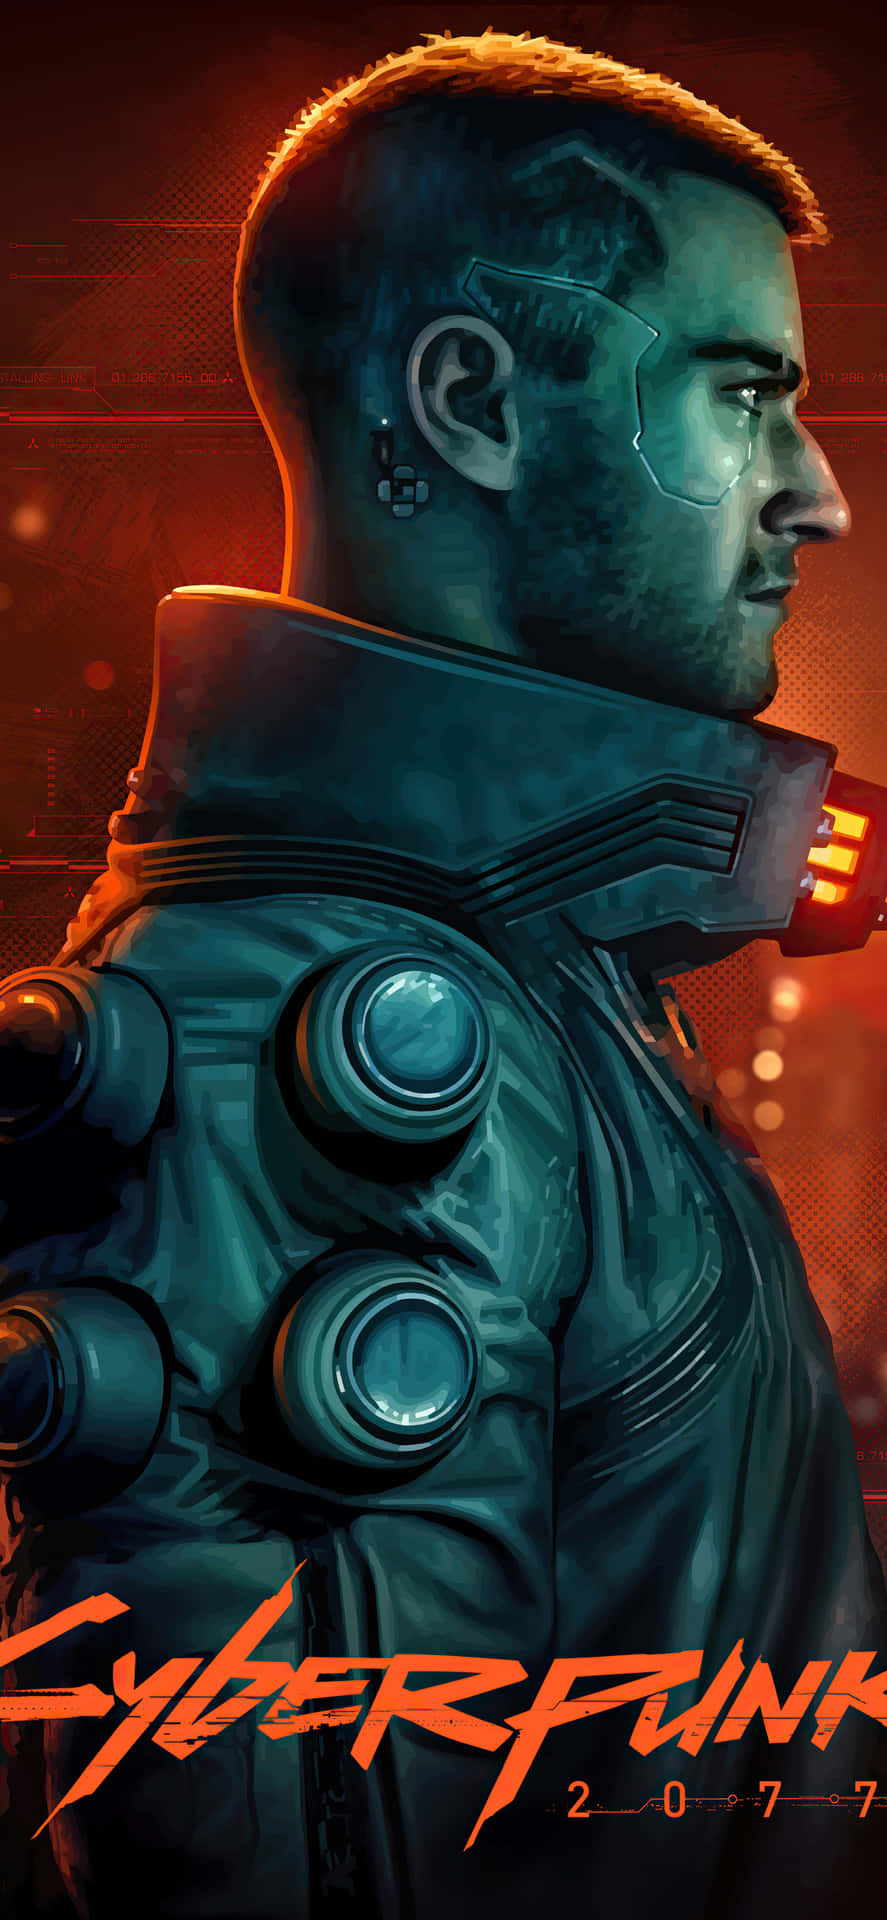 Iphone X Cyberpunk 2077 Background Poster Man Wearing Jacket